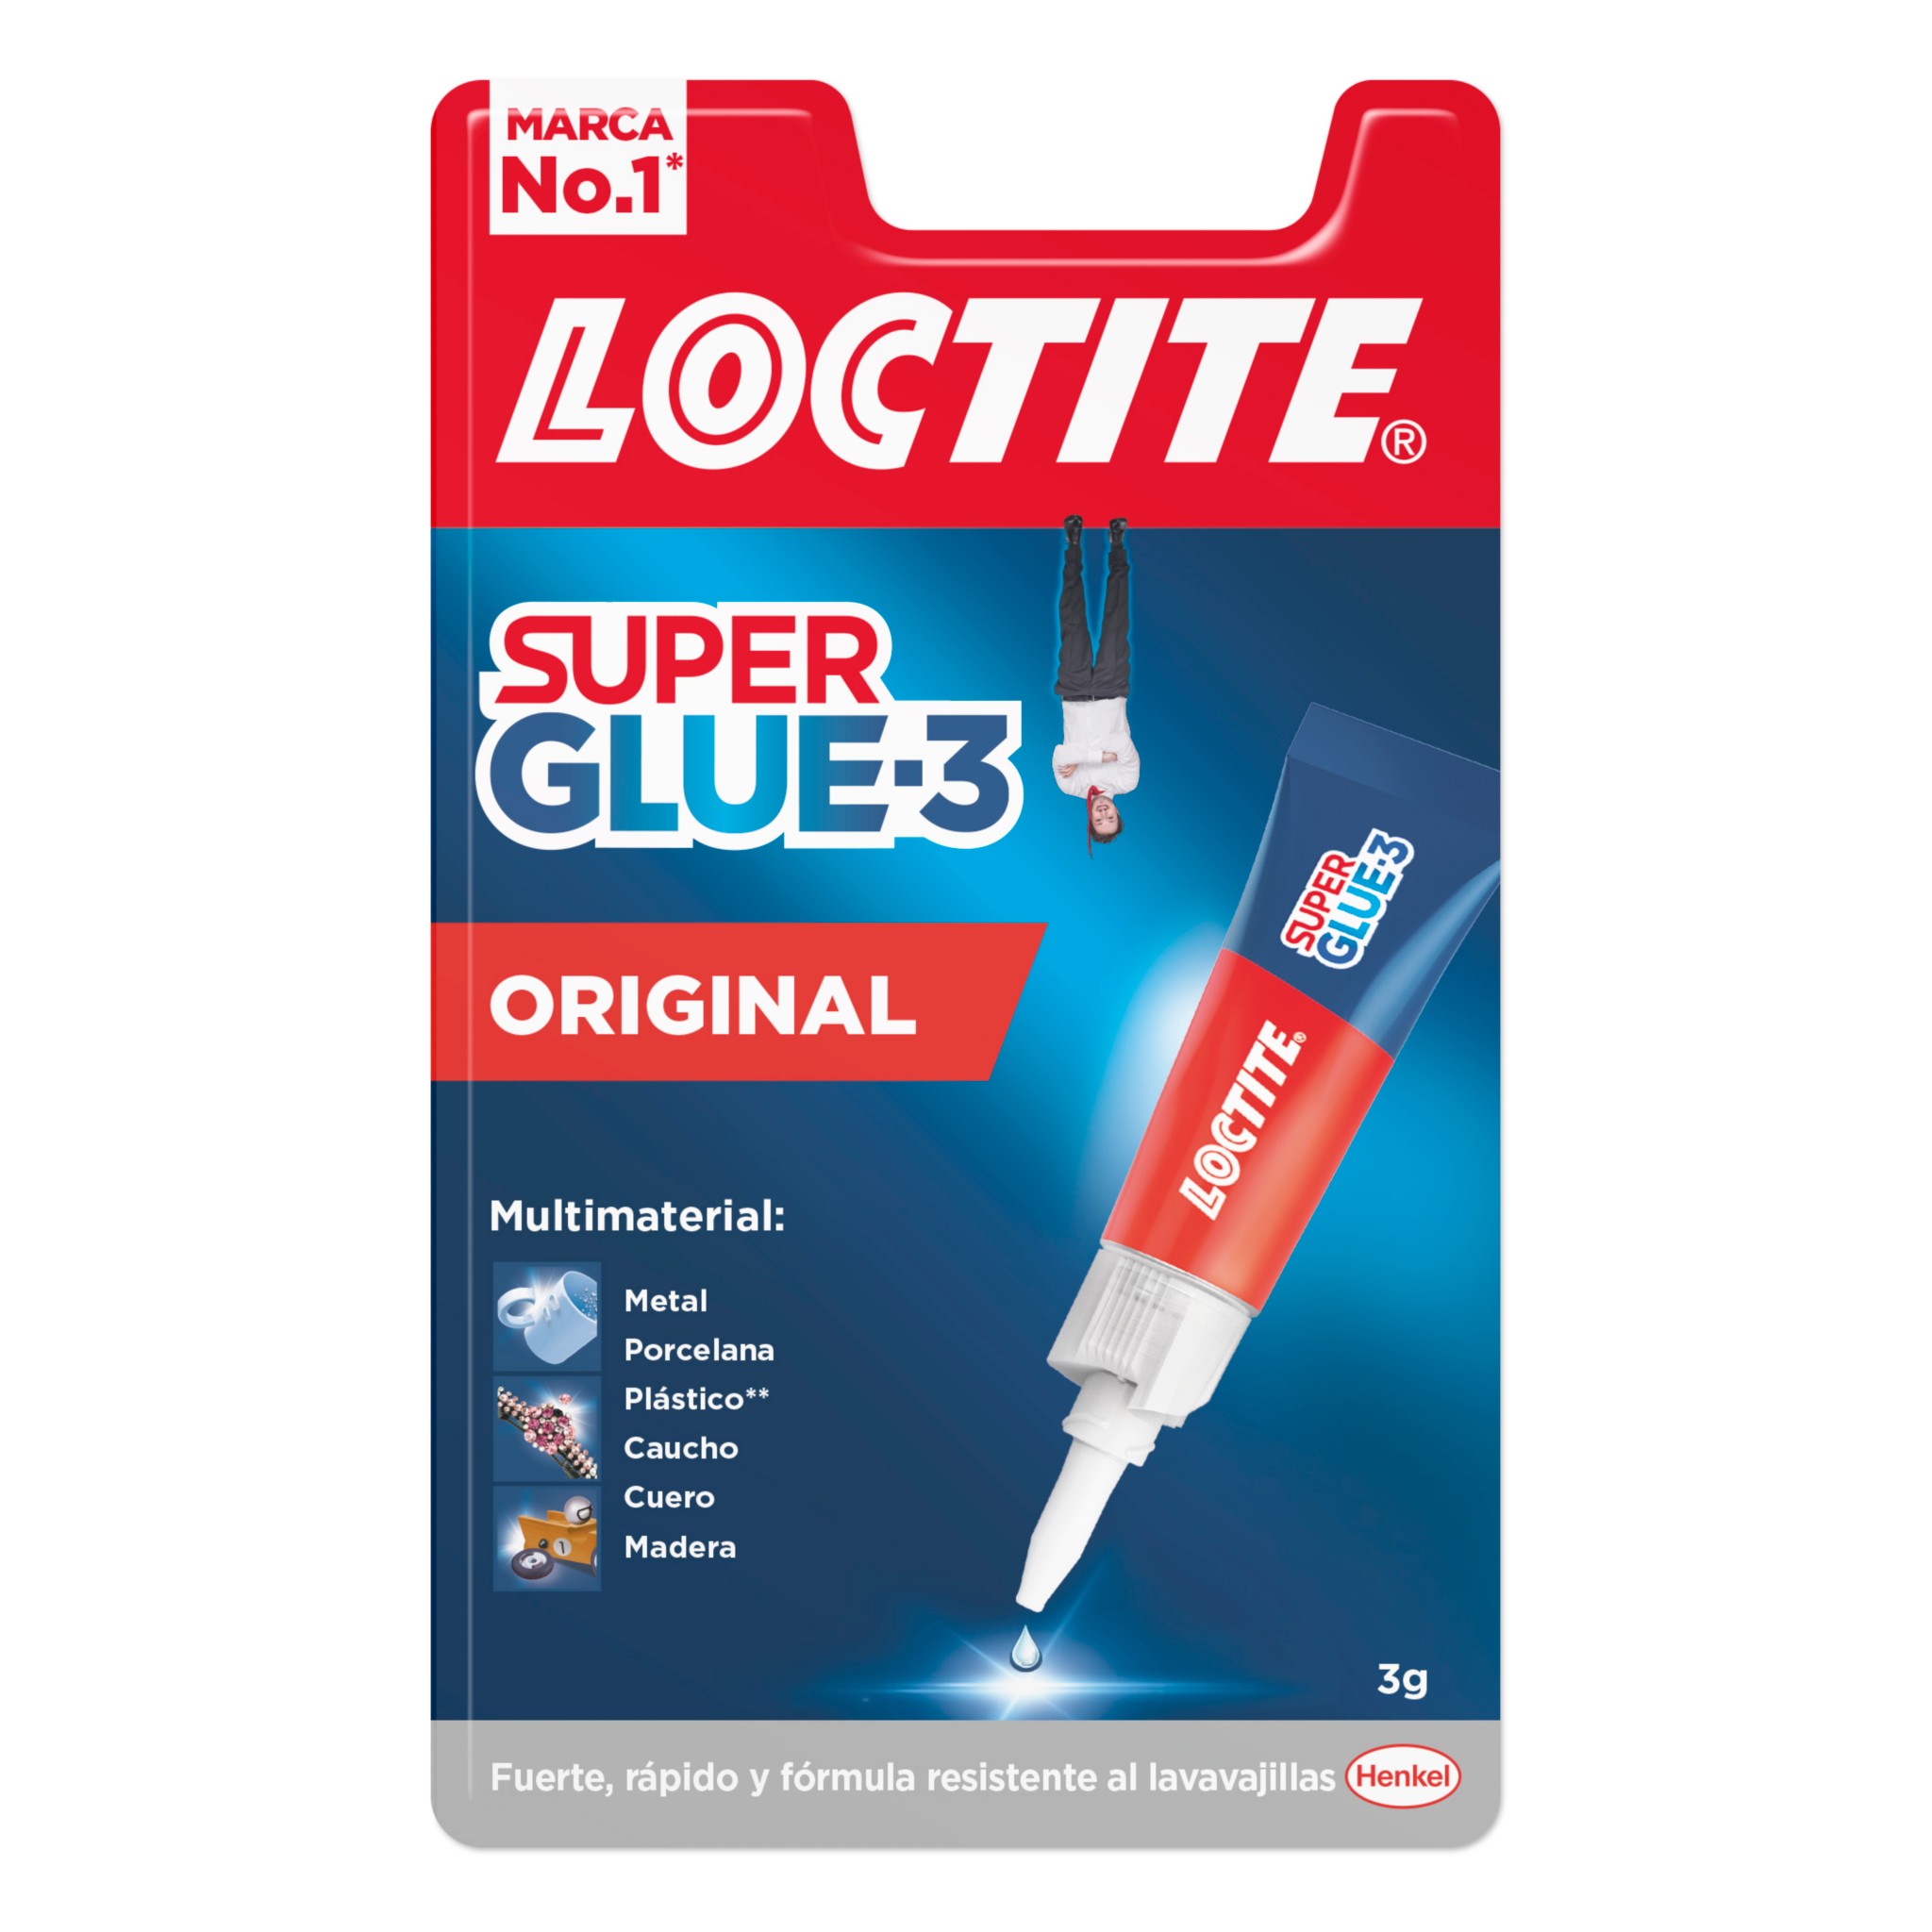 Super Glue-3 Original